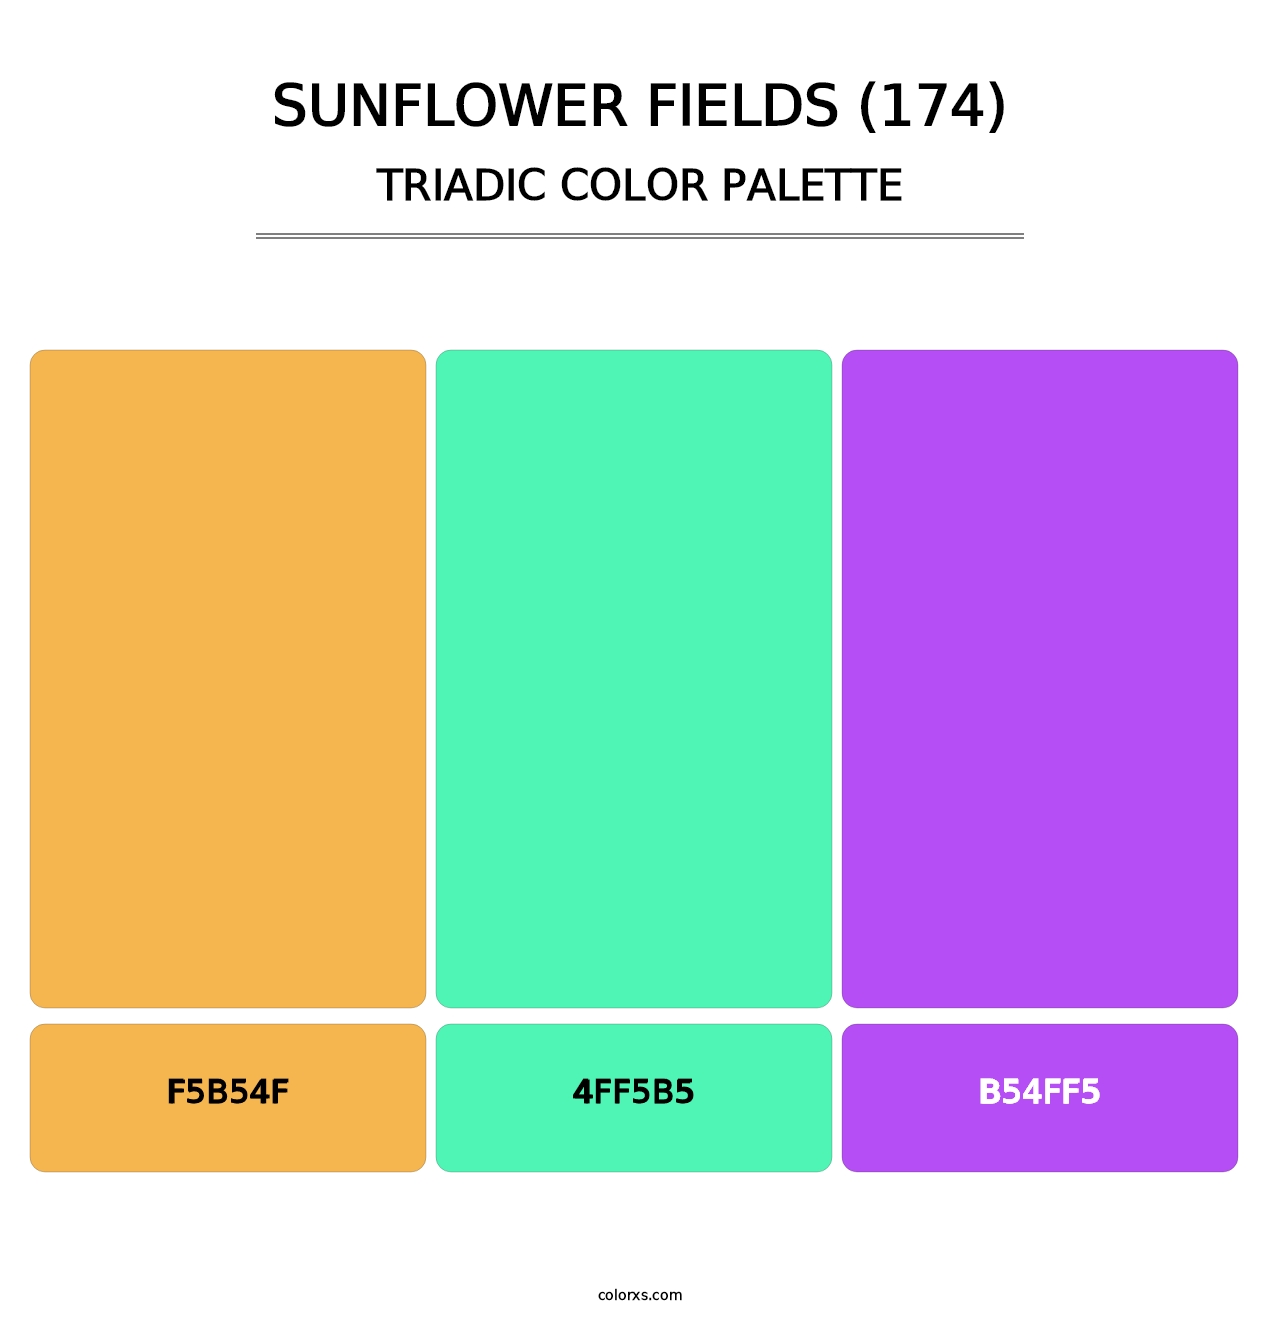 Sunflower Fields (174) - Triadic Color Palette